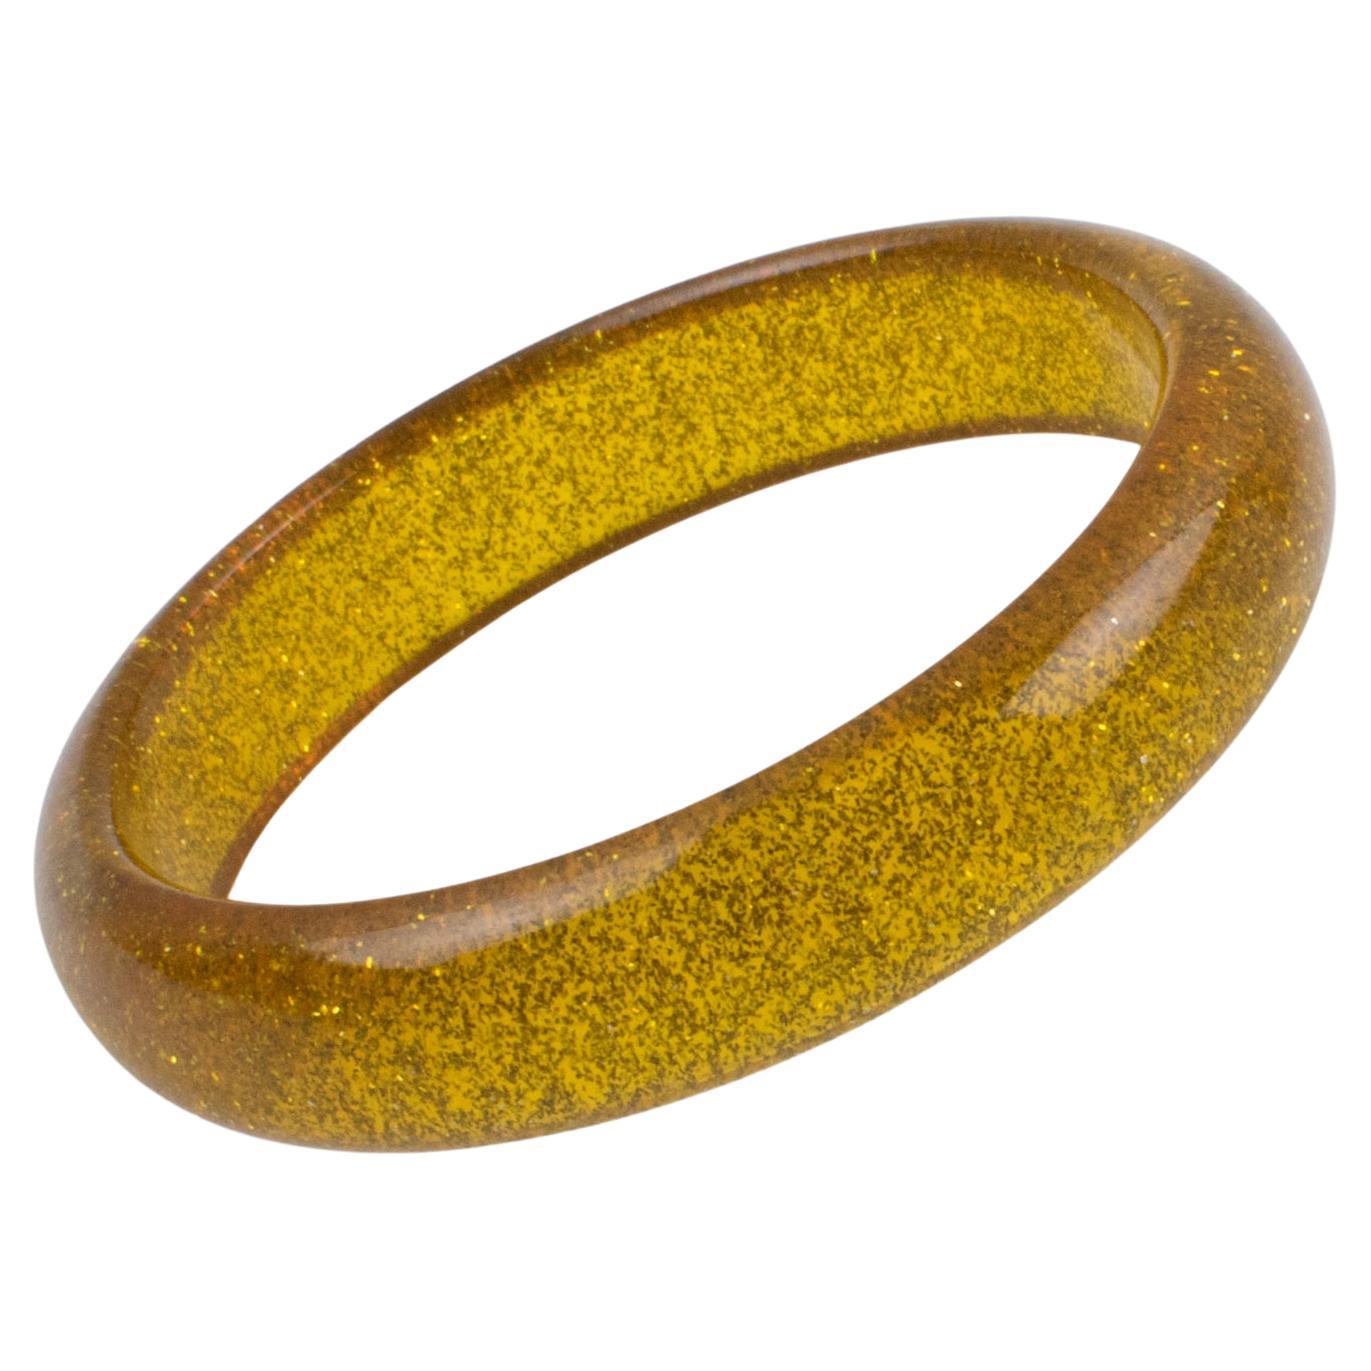 Solid 18k Karat Yellow Gold Spring Ring Clasp 5mm Au750 18ct Round